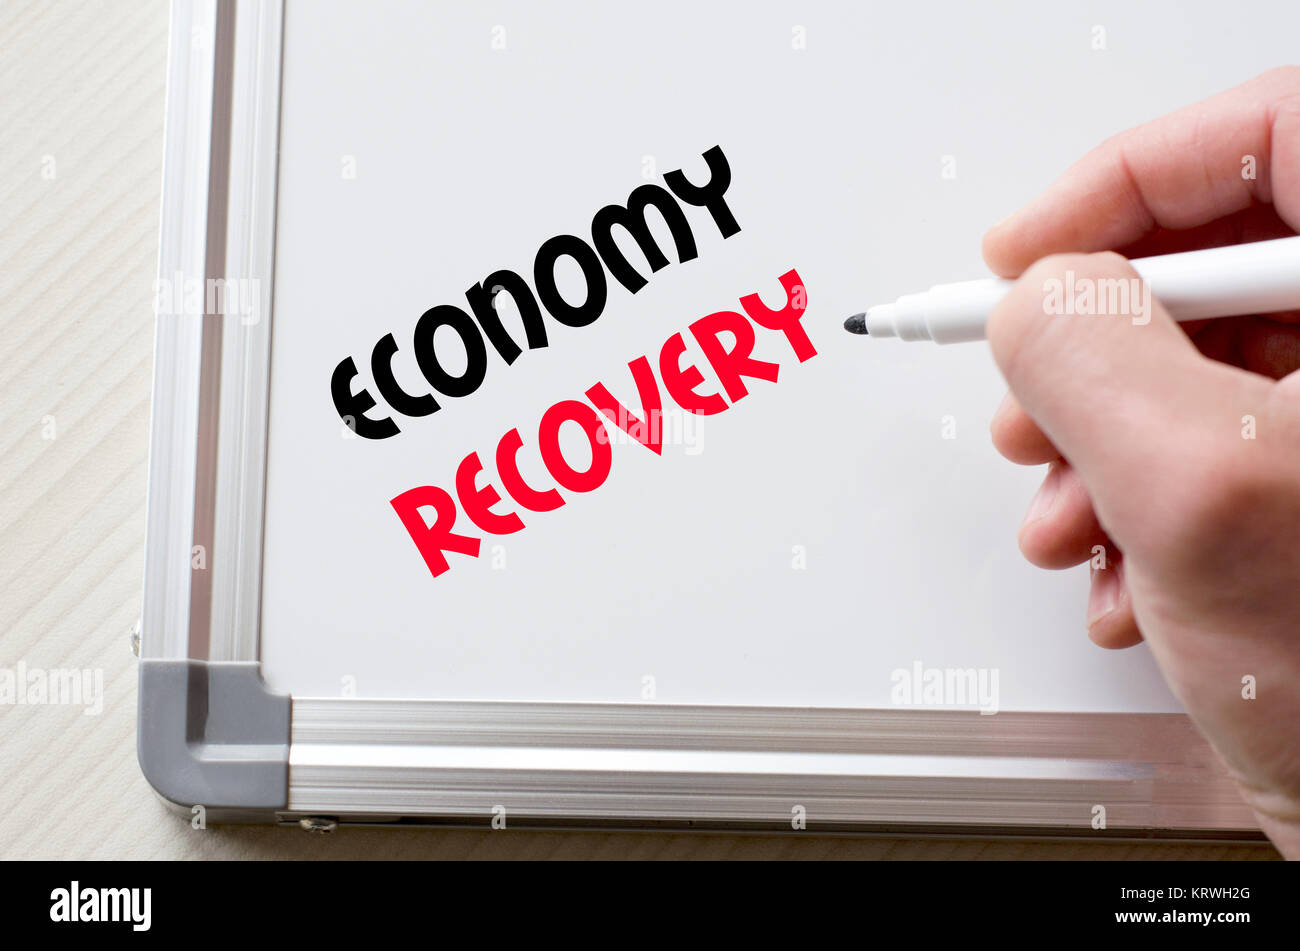 Economy recovery written on whiteboard Stock Photo